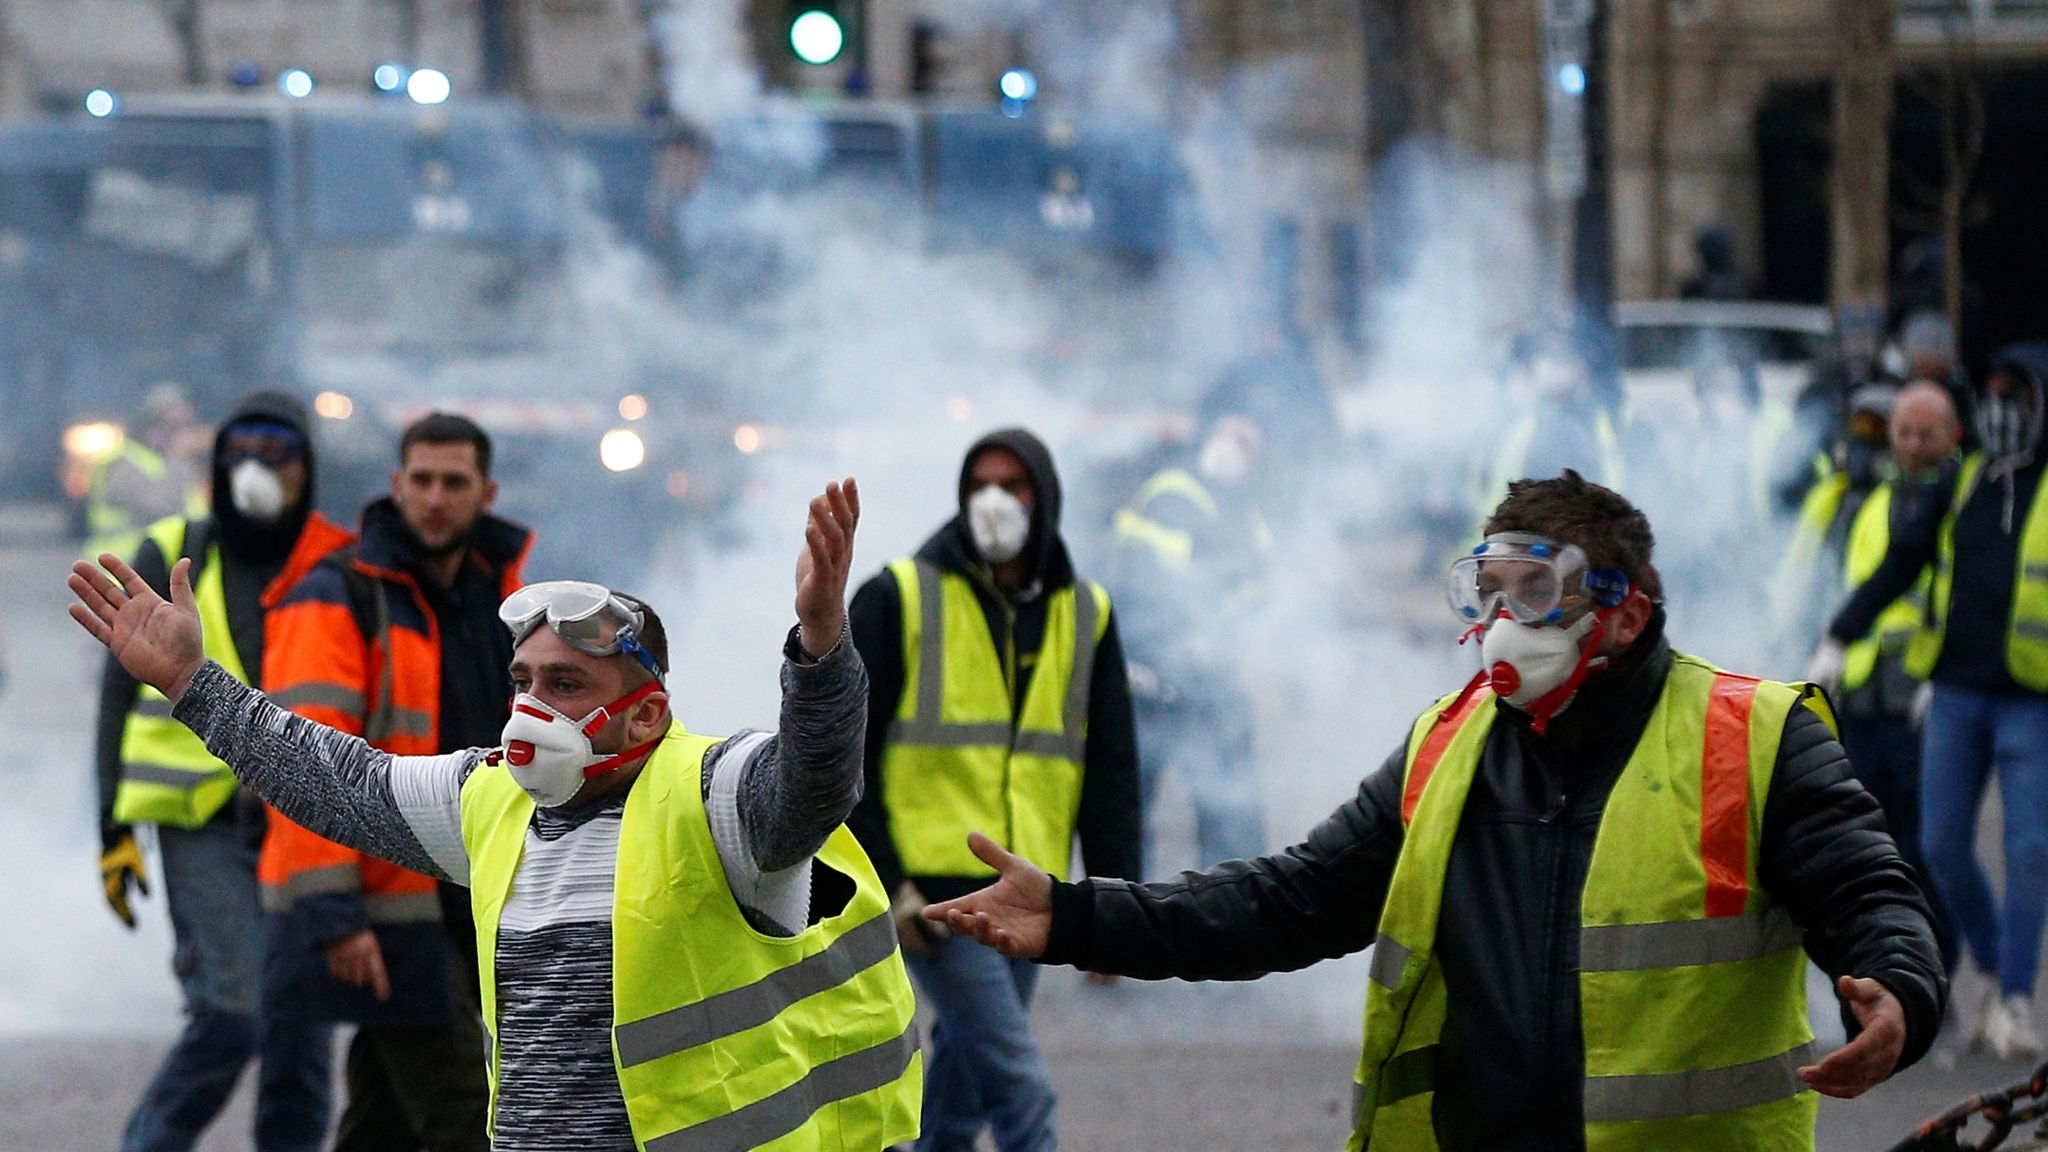 Paris fuel protests Dozens arrested as 'yellow vest' demonstrations